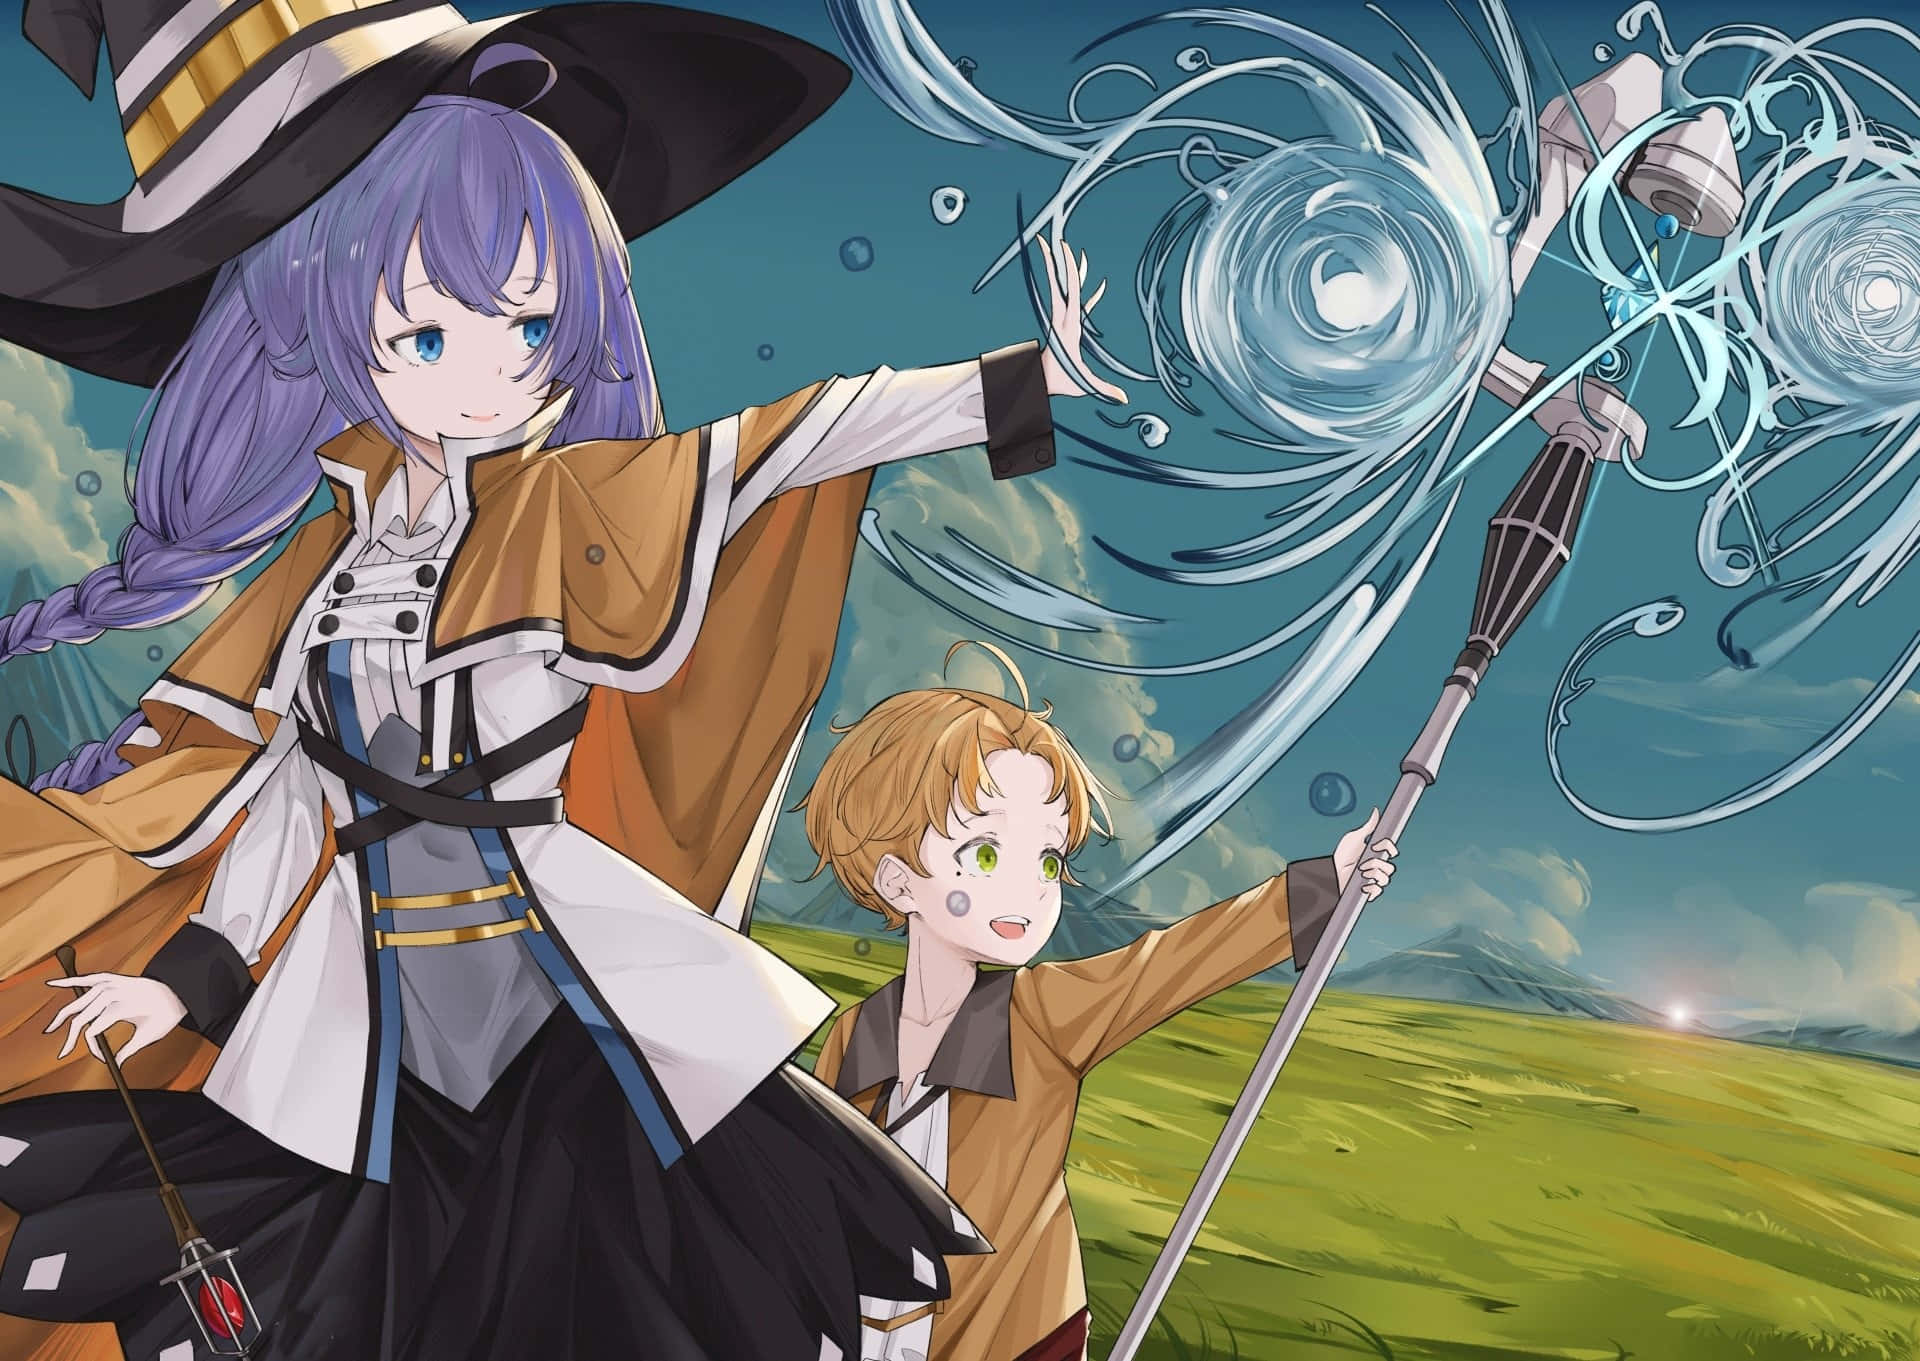 Rudeus in Musoku Tensa: An Anime of Magic, Mystery, and Adventure